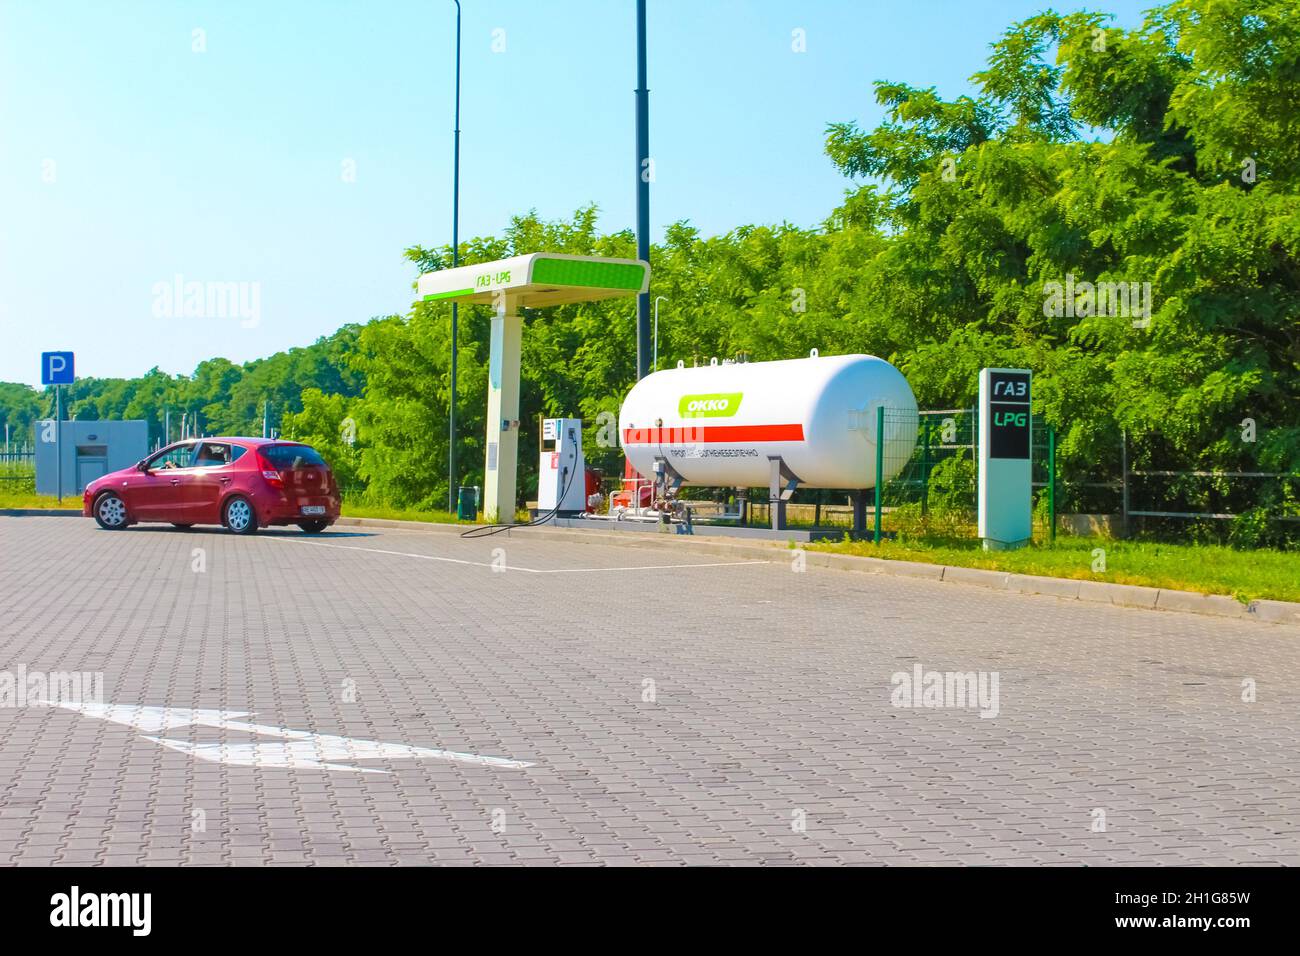 Kiew, Ukraine - 28. Juni 2020: OKKO-Tankstelle am sonnigen Tag in Kiew, Ukraine, am 28. Juni 2020. Stockfoto